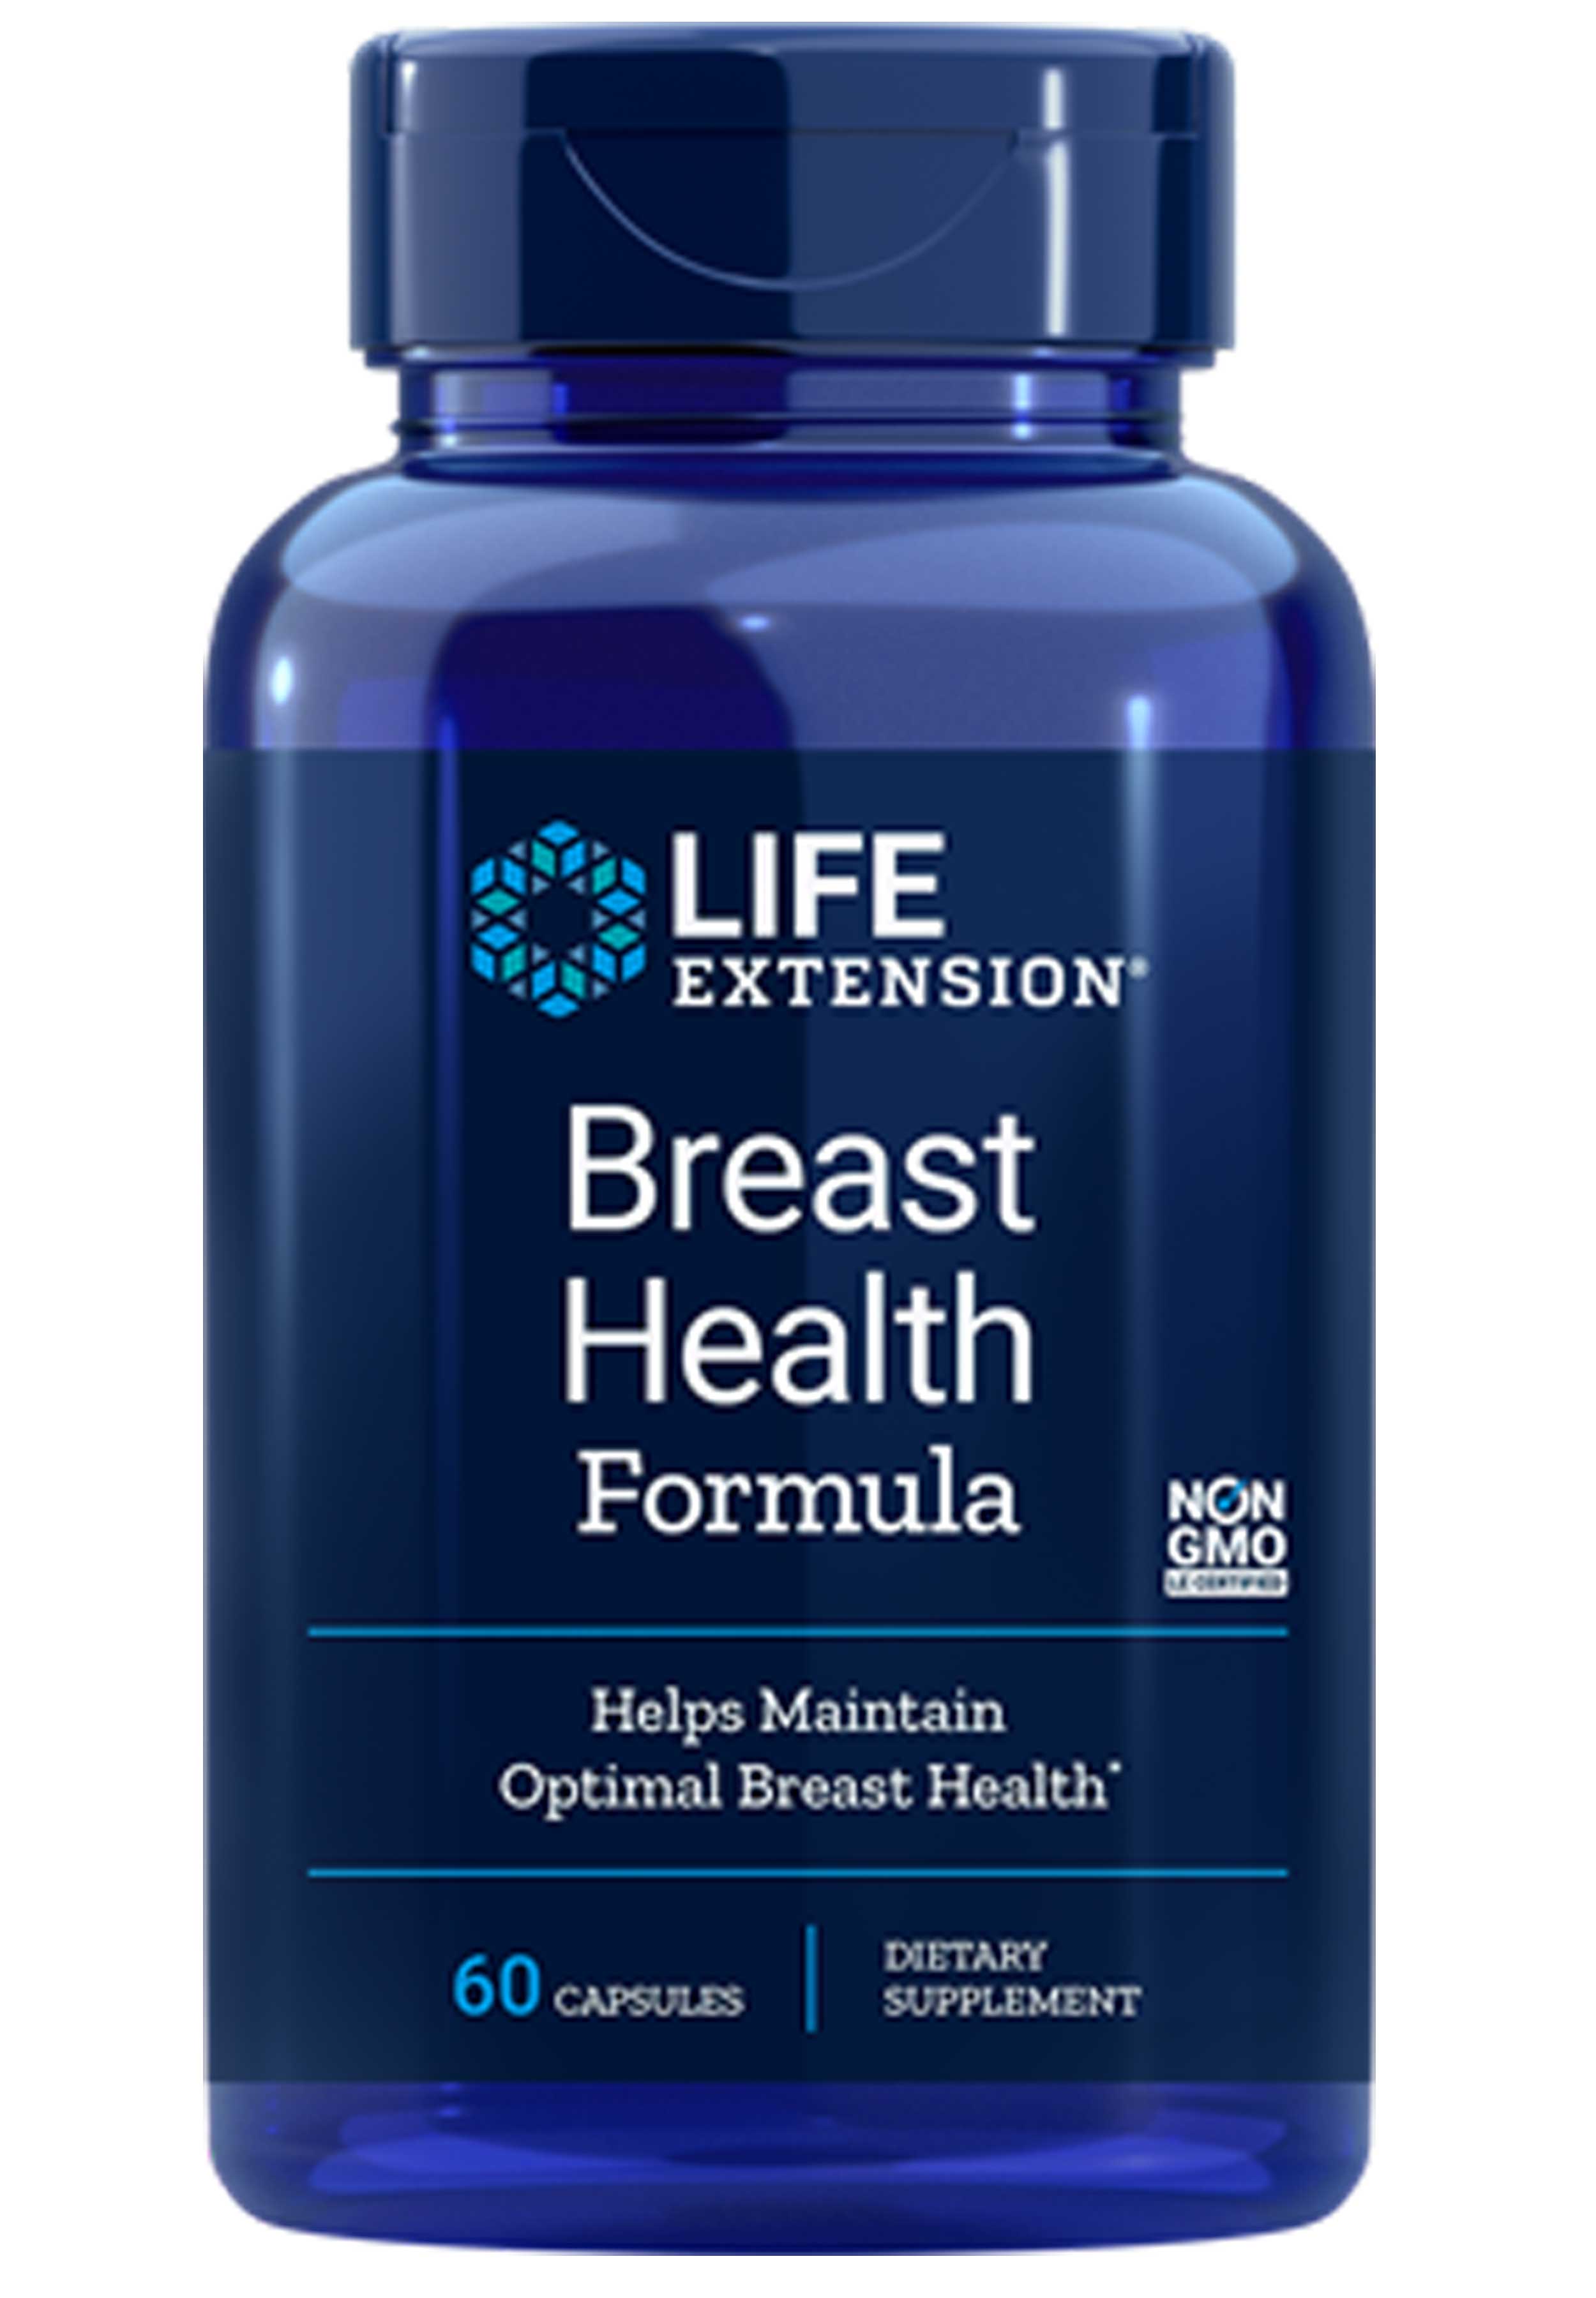 Life Extension Breast Health Formula